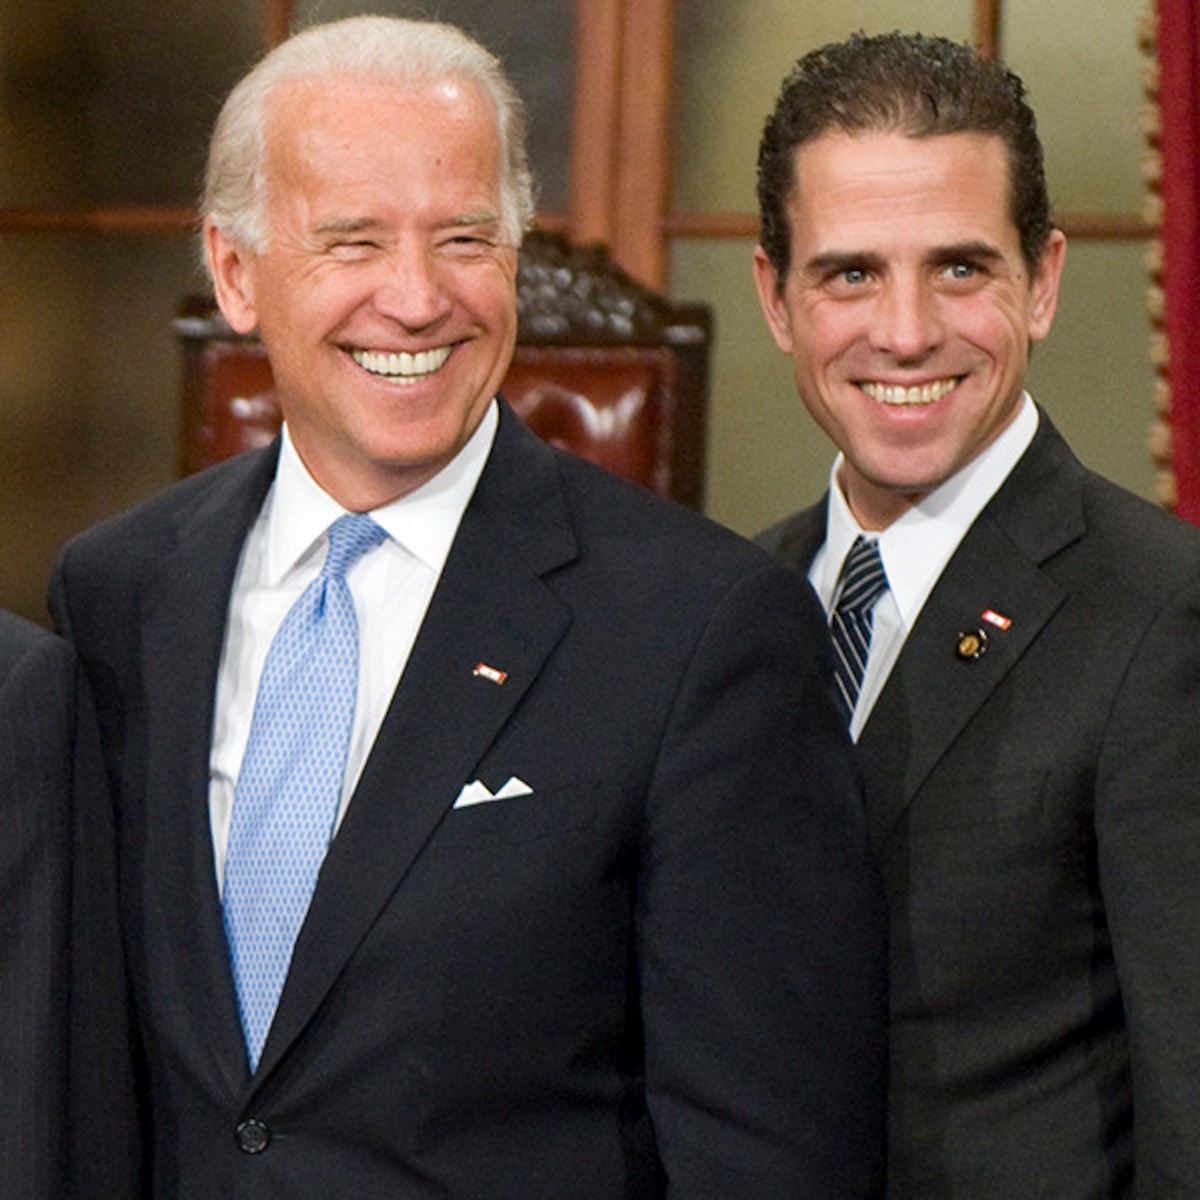 Monument bladre bruser Surprise! Joe Biden's Son Hunter Biden Is Married - E! Online